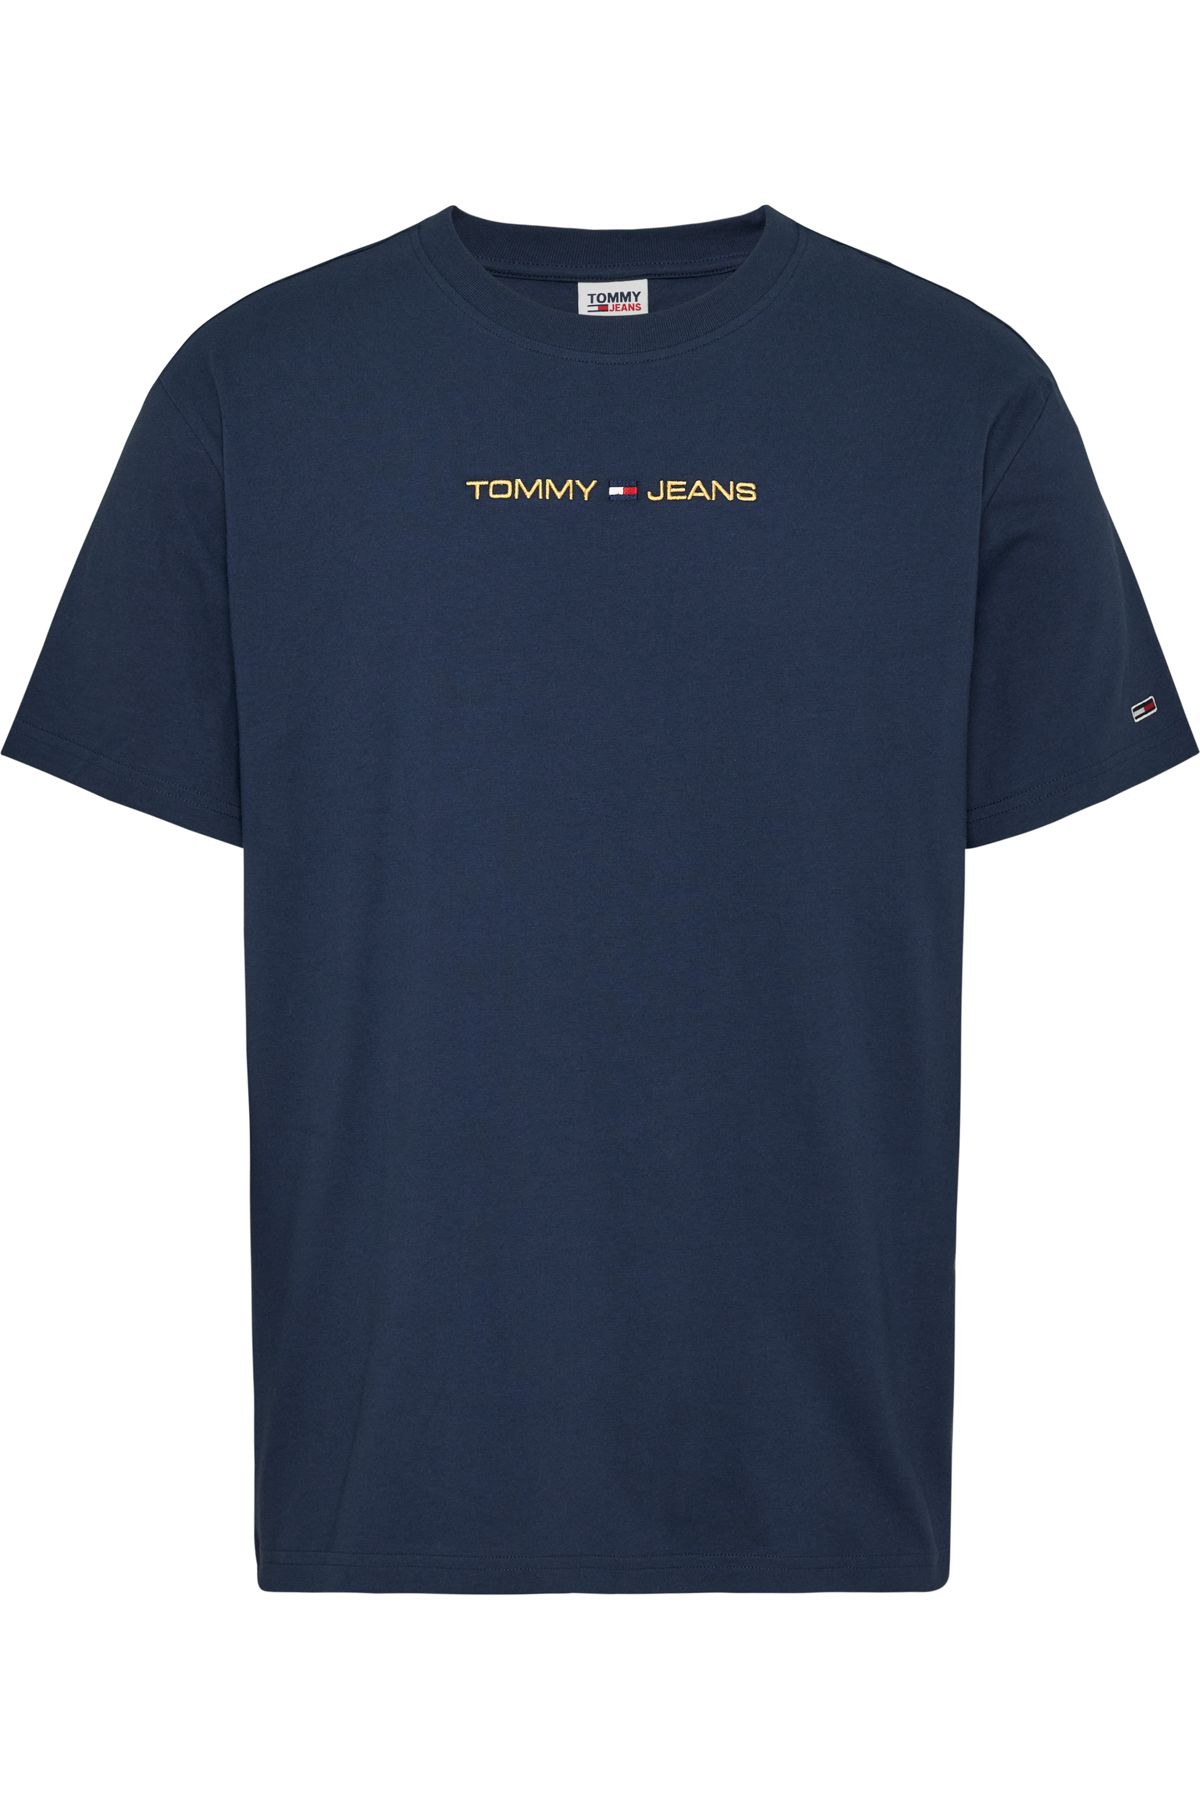 Tommy Hilfiger T-Shirt Herren Twilight Navy - Trendyol | Druckkleider